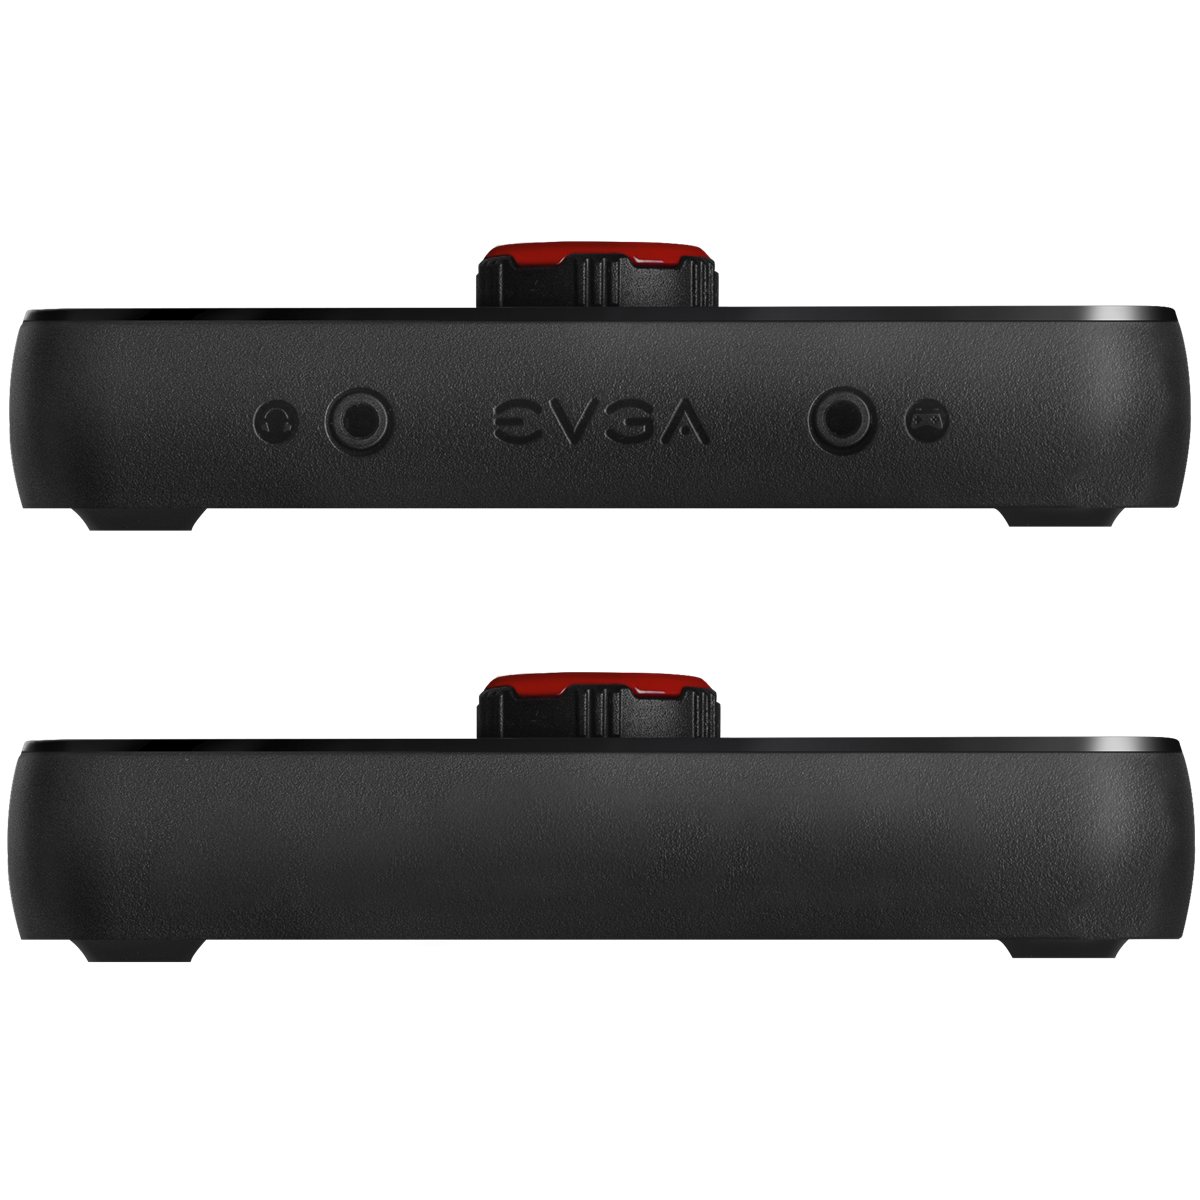 EVGA XR1 Pro 4K capture 4K HDMI in/PassThru